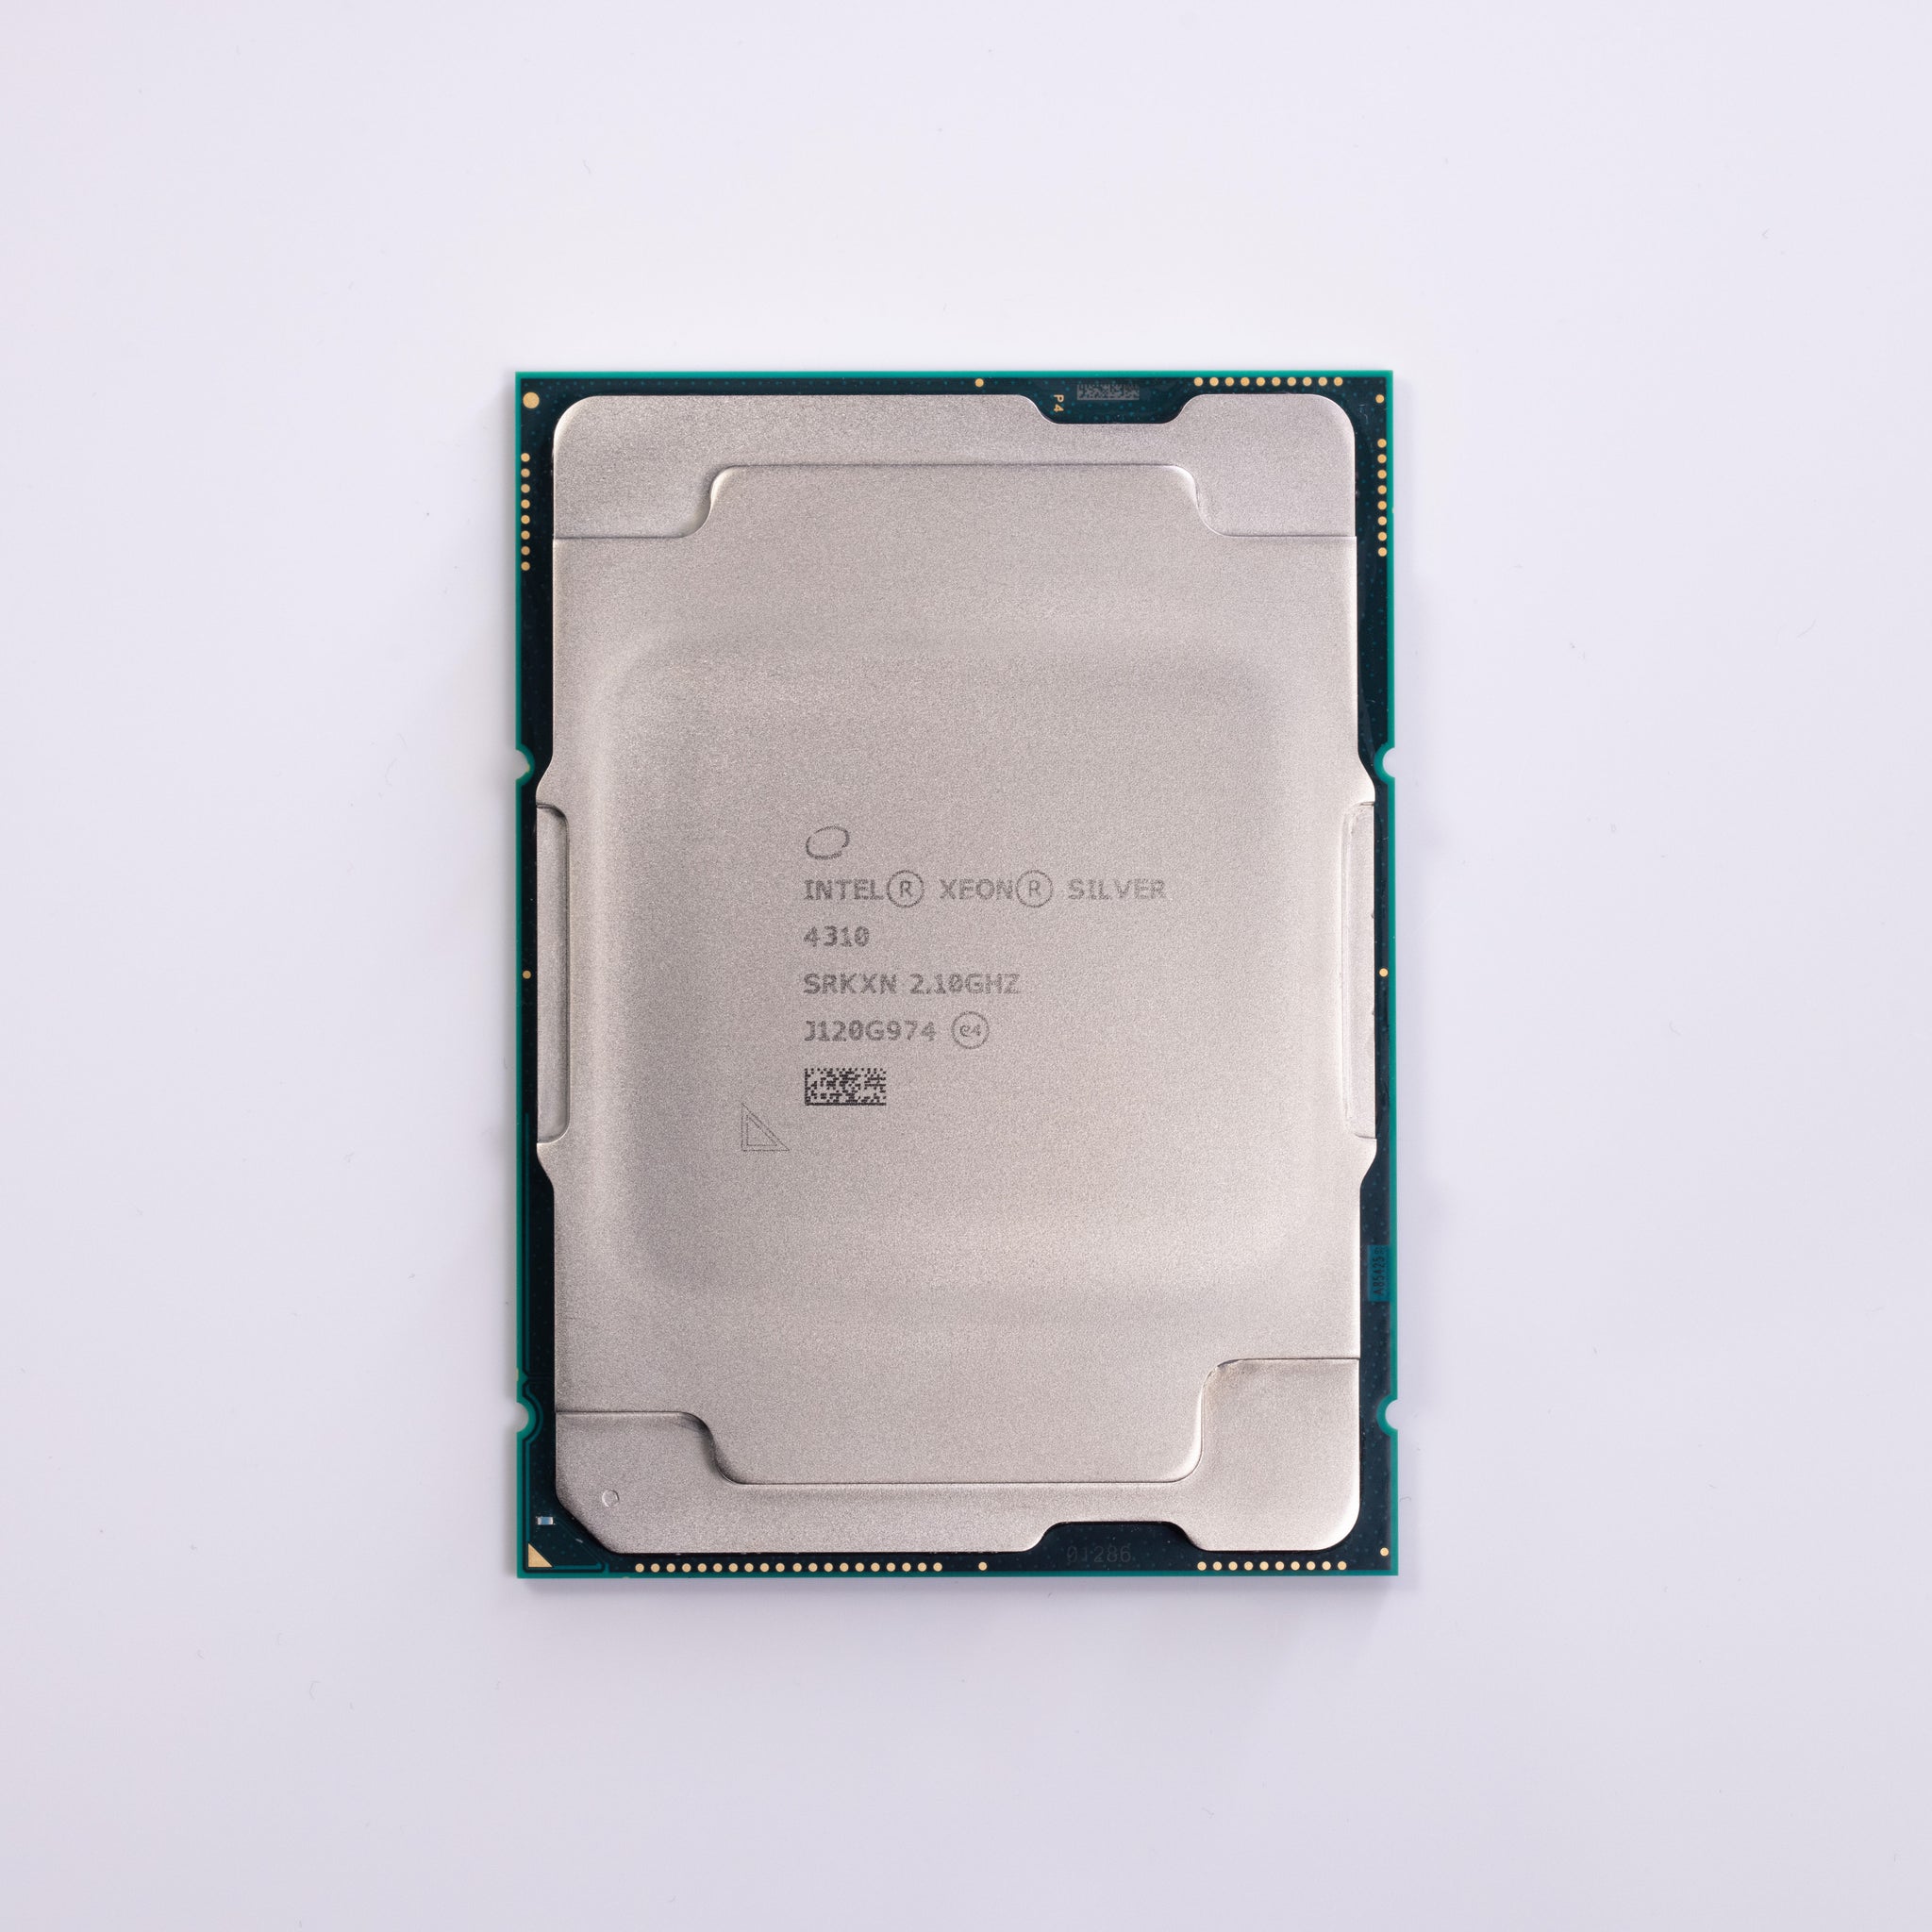 Intel Xeon Silver 4310 Processor 18M Cache, 2.10 GHz, SRKXN, Tray